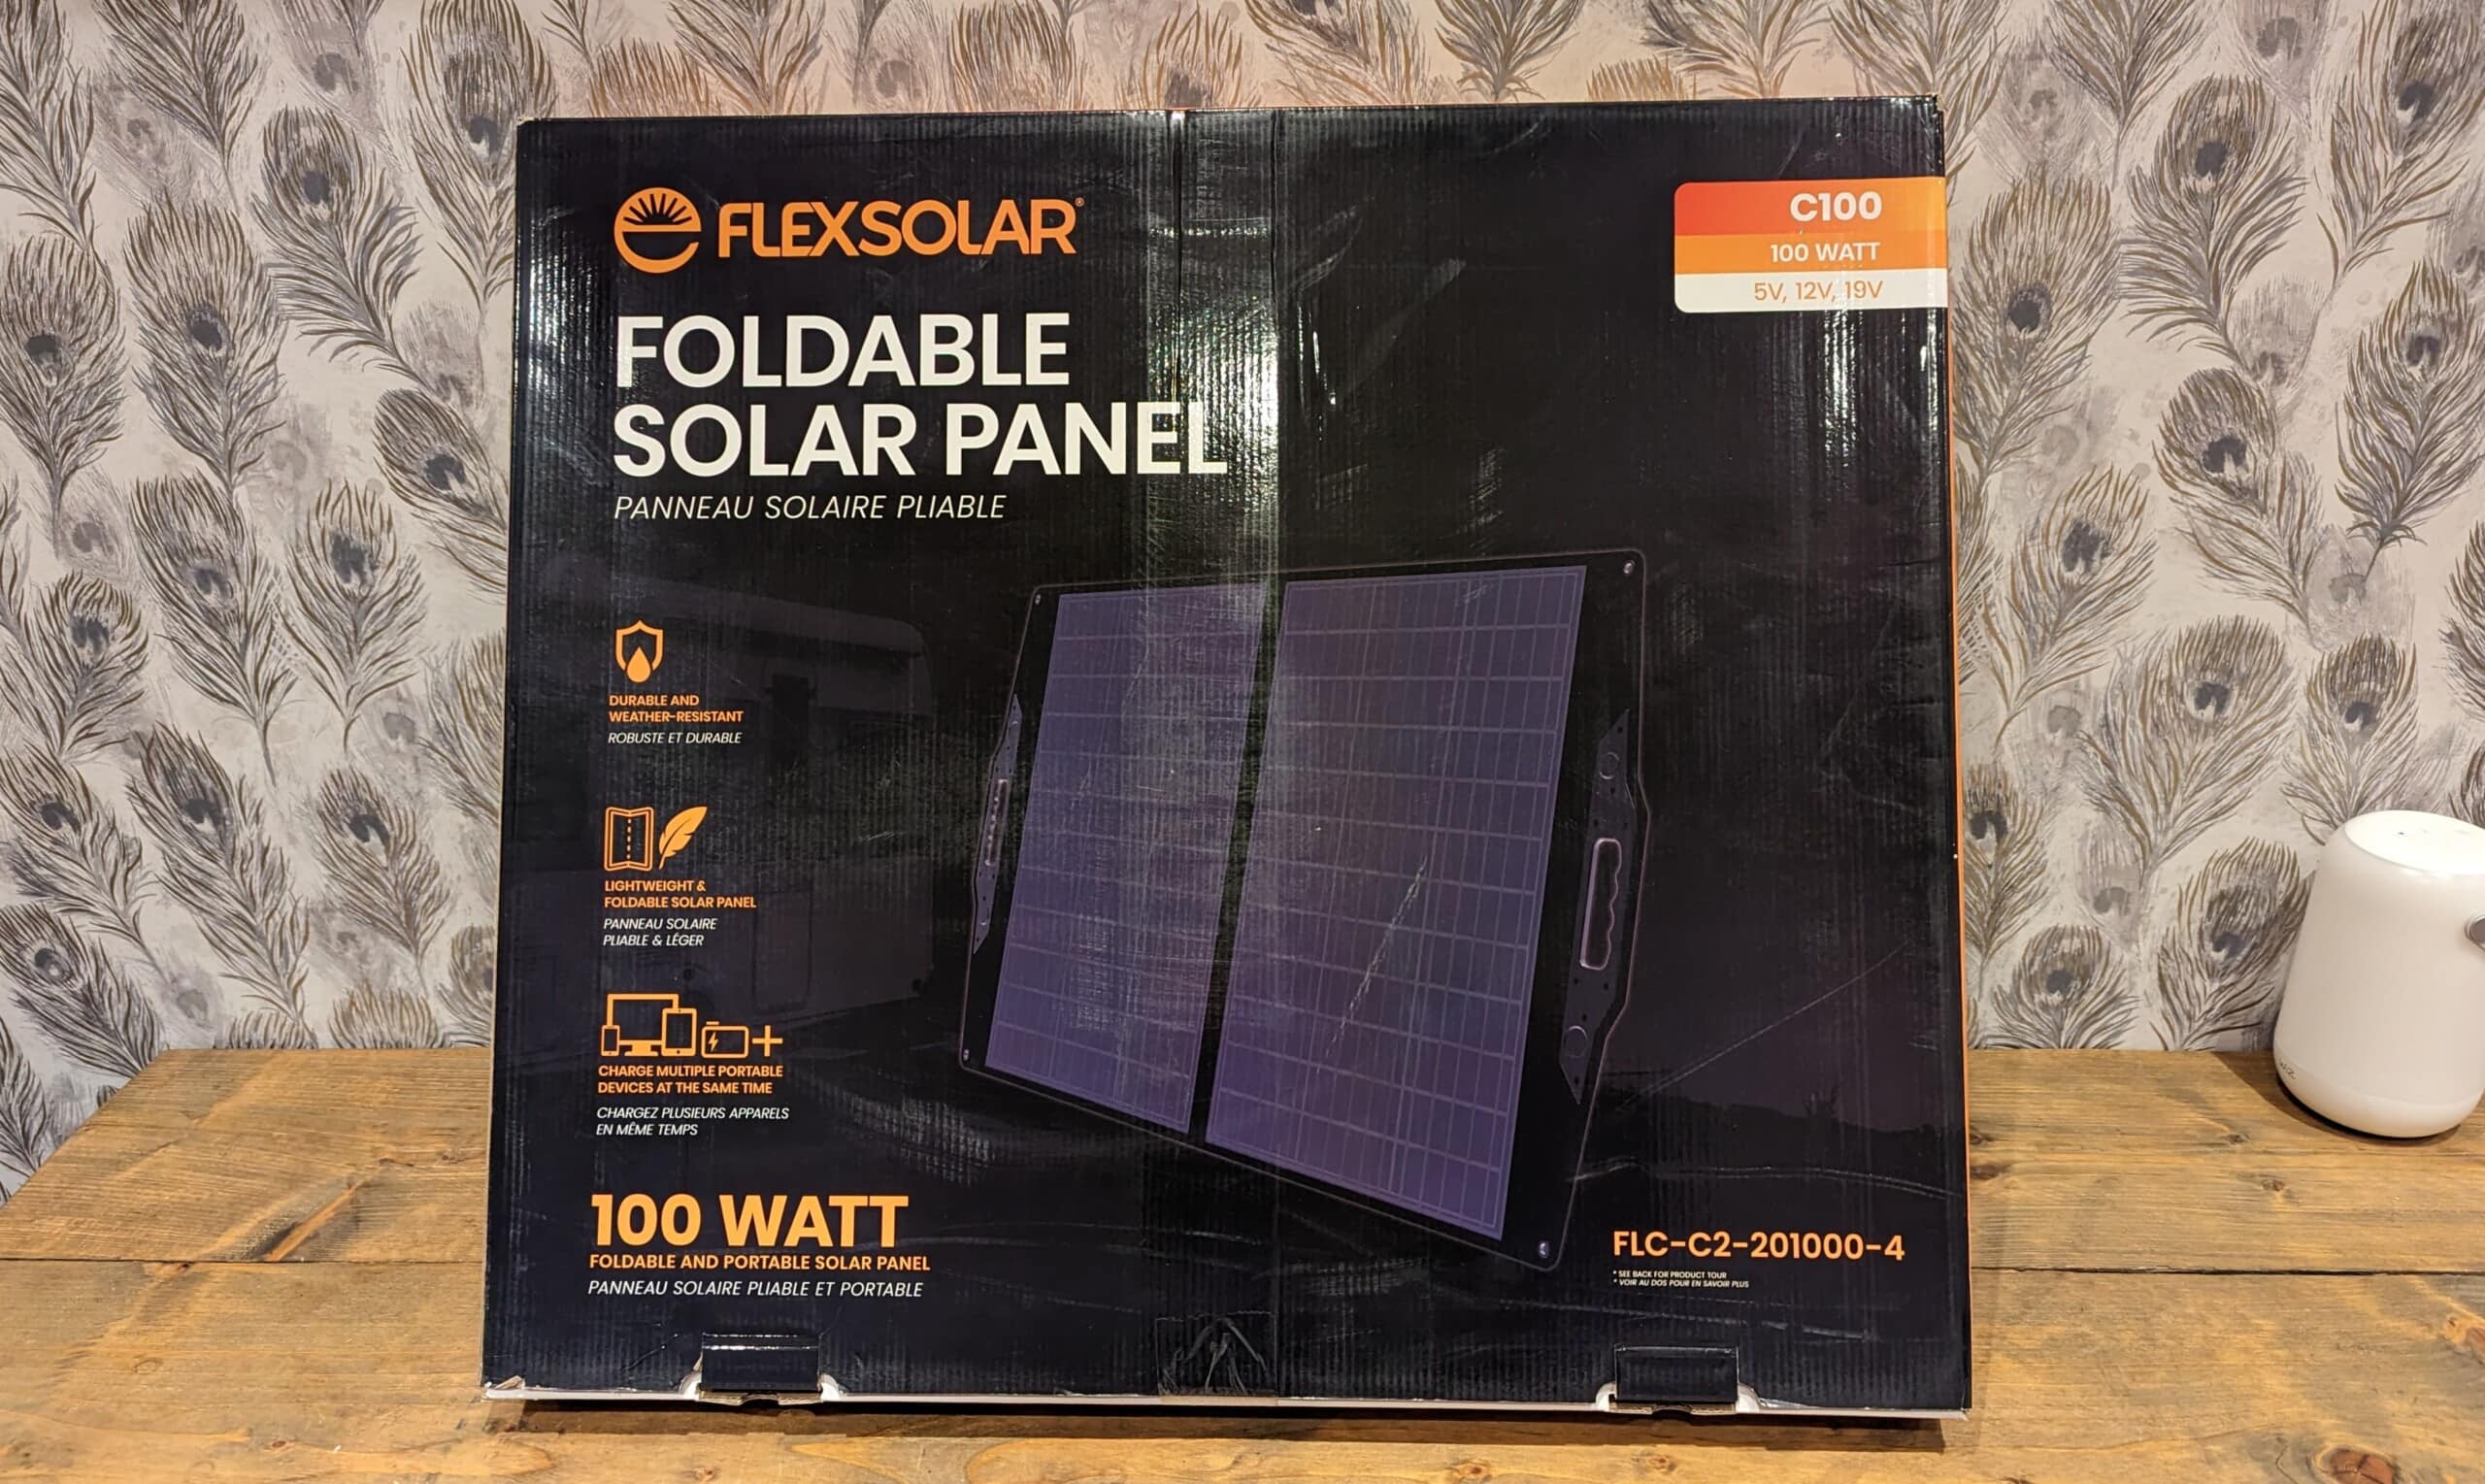 FlexSolar Foldable 100W Solar Panel Review vs Mobisolar
&amp; Jackery SolarSaga